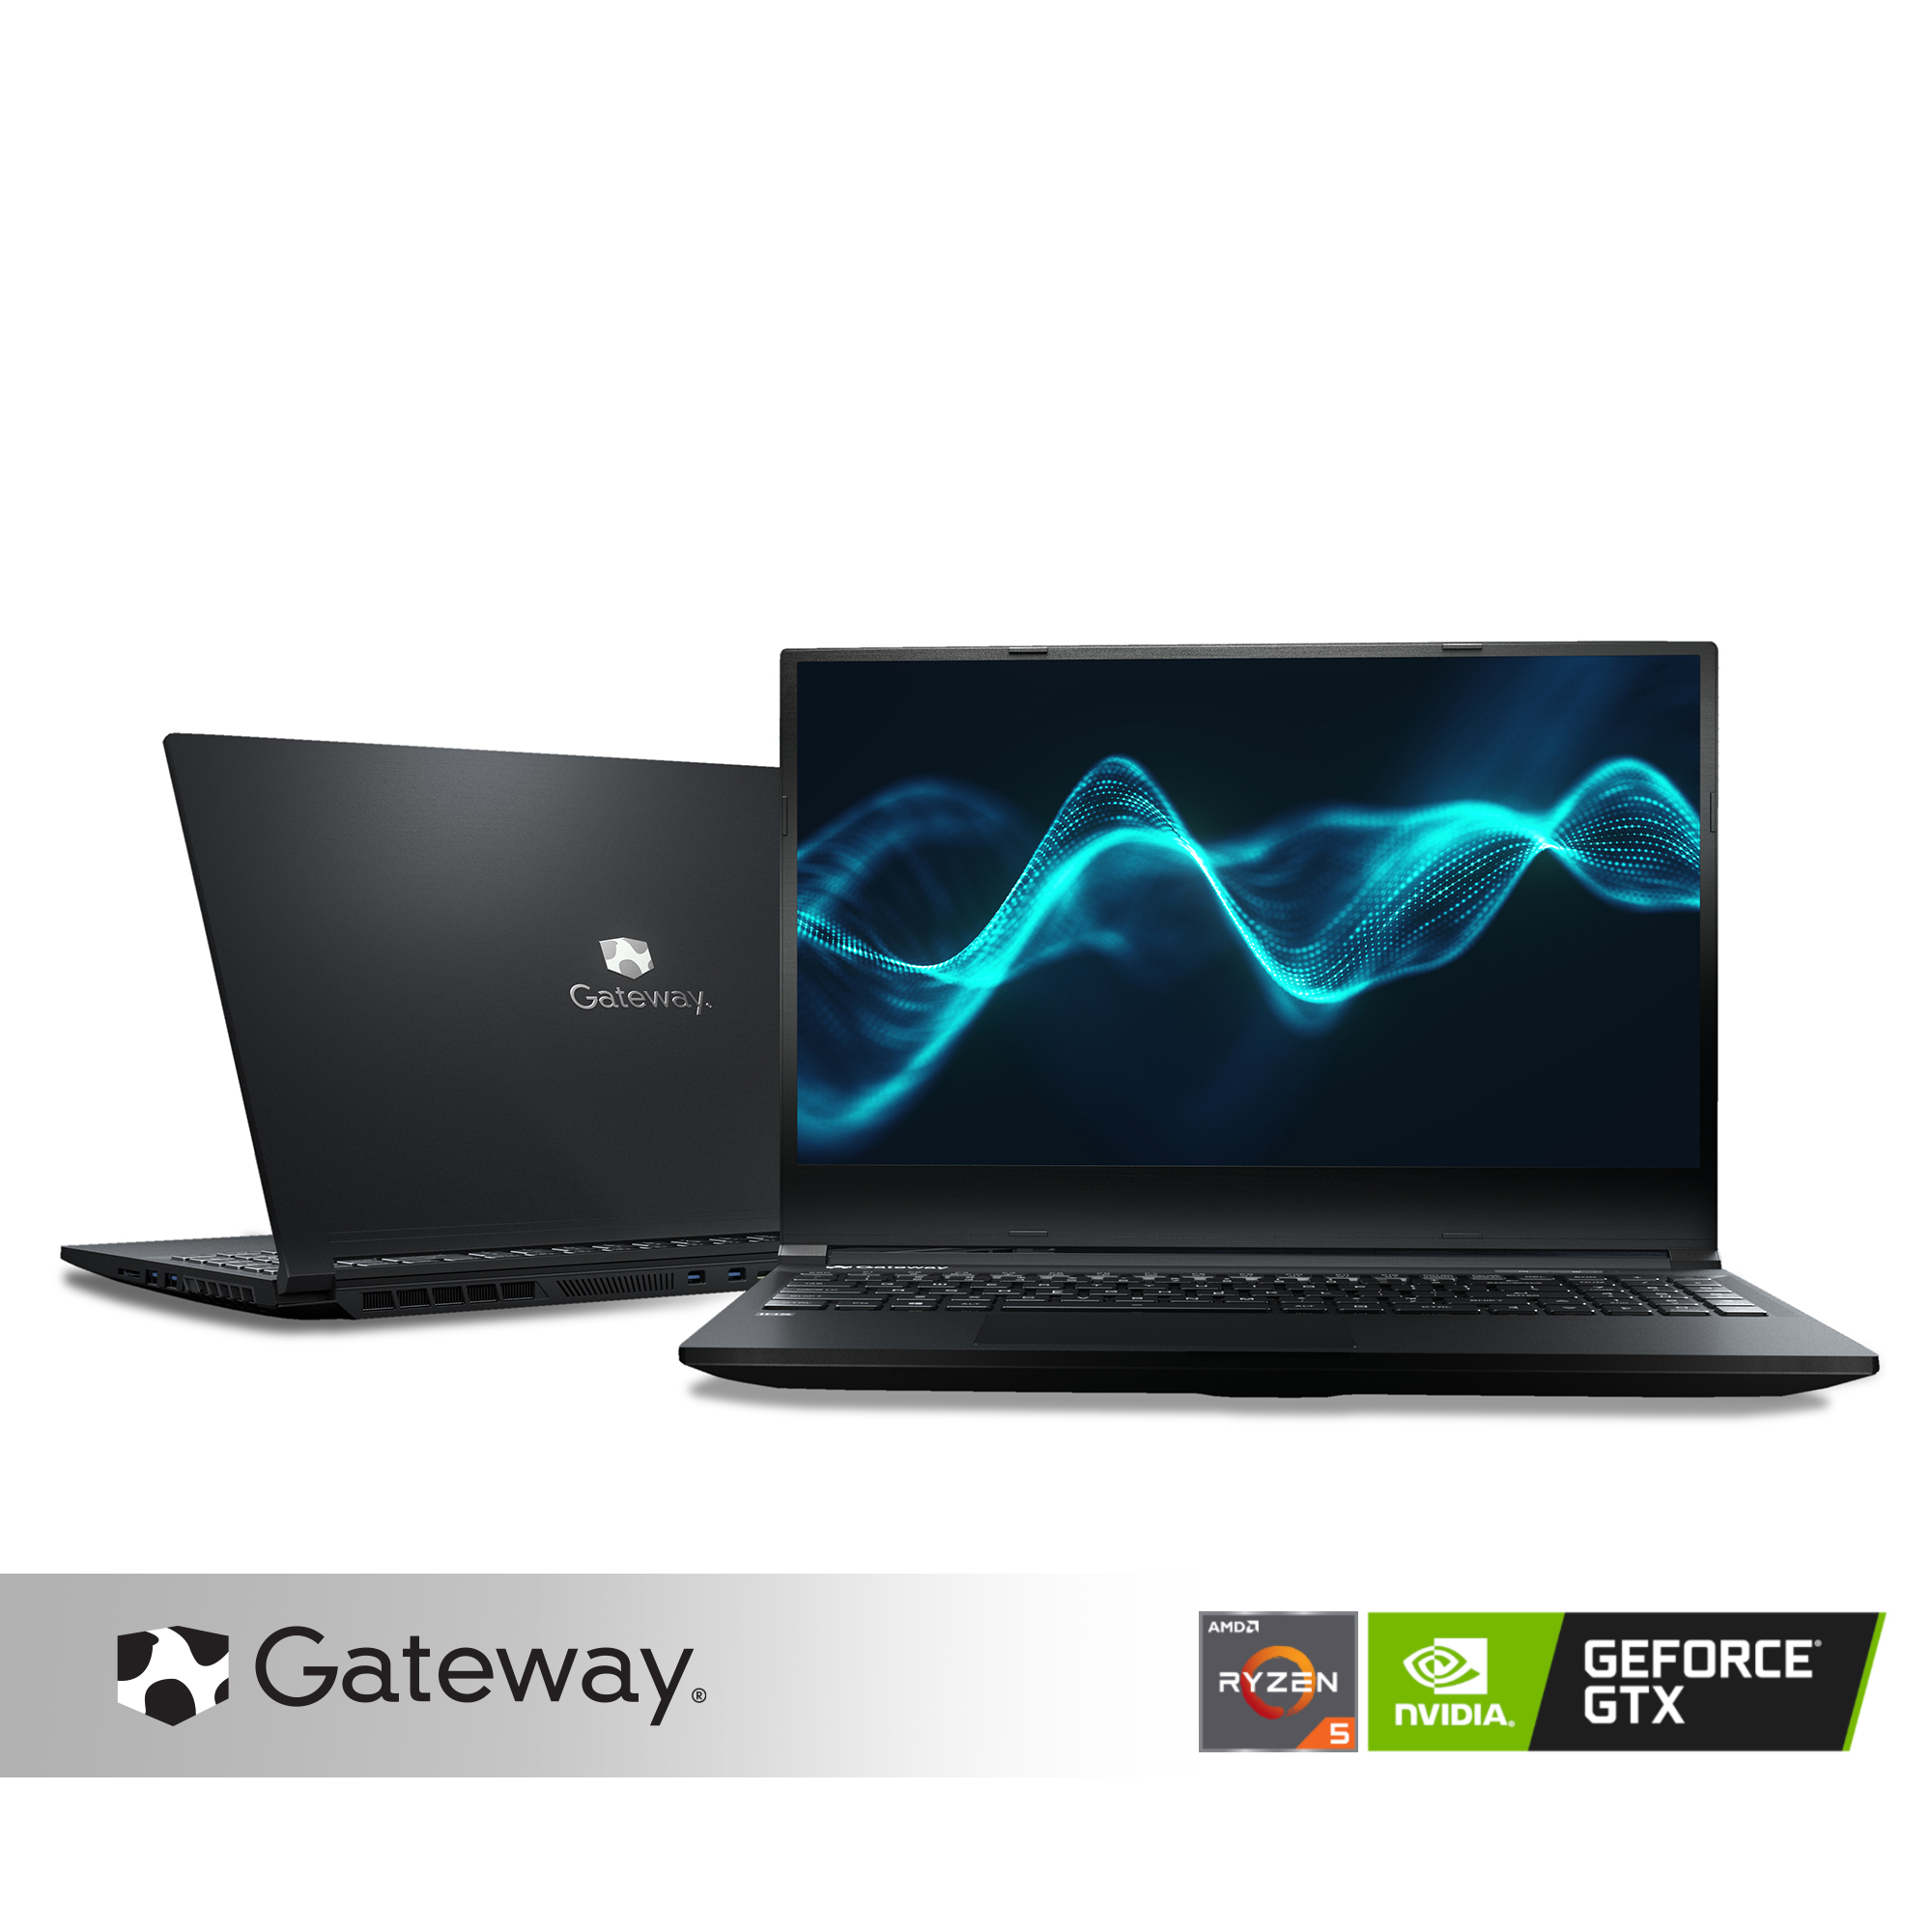 Gateway Creator Series 15.6" FHD Performance Notebook, AMD Ryzen 5 4600H, NVIDIA 1650 GTX, 8GB RAM, 256GB SSD, Xbox Game Pass for PC, HD Webcam, Cortana, Windows 10 Home - image 1 of 11